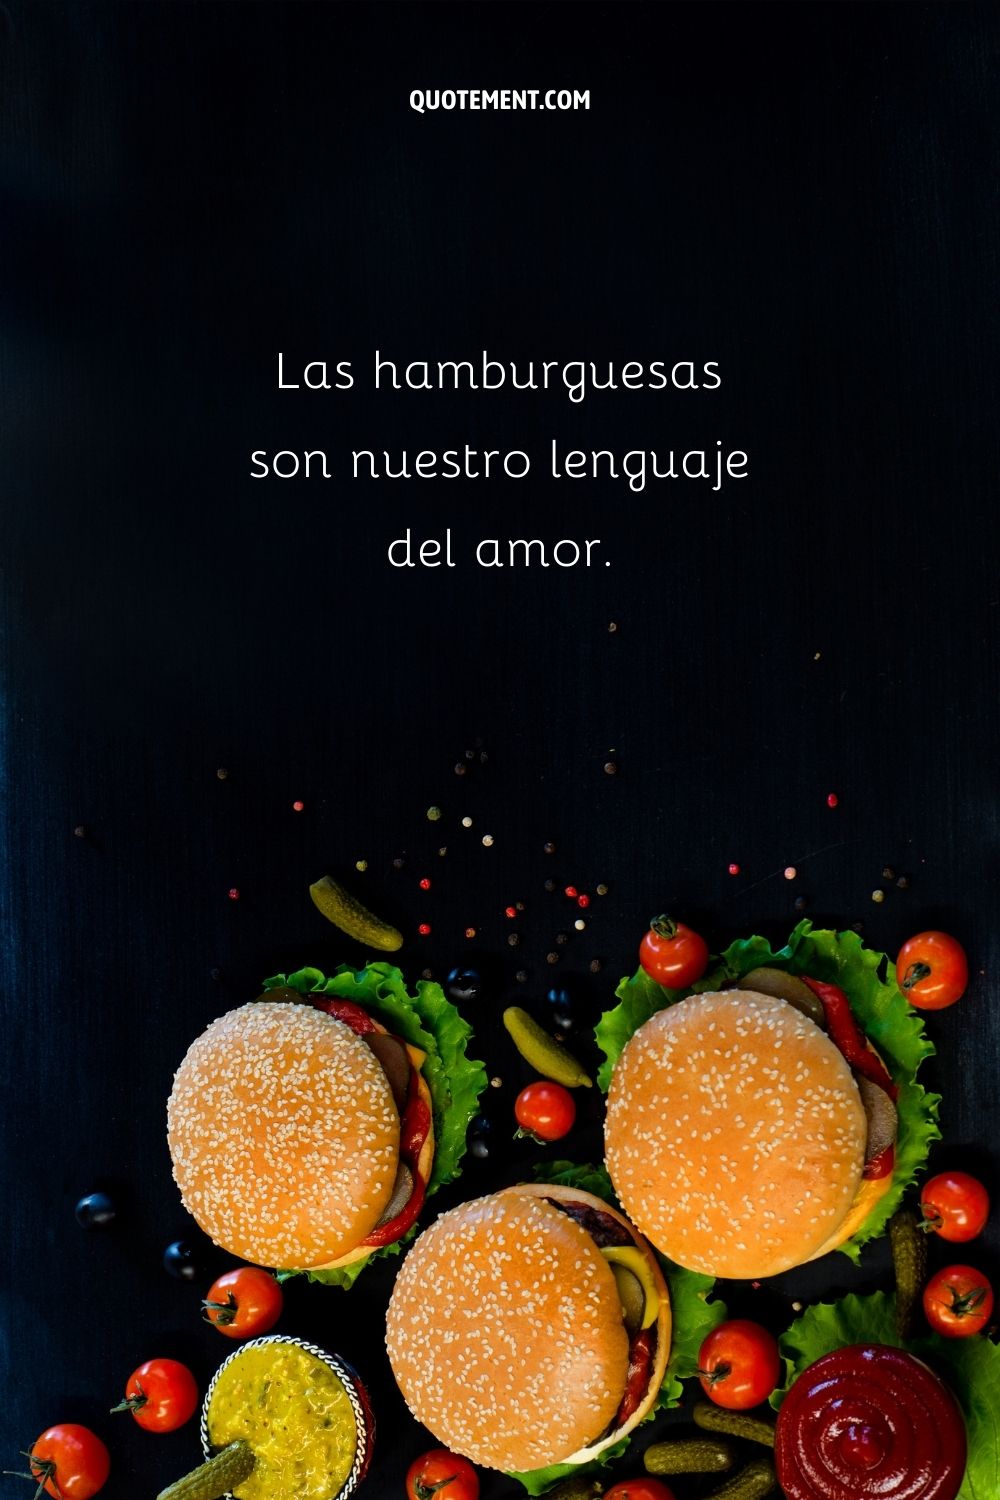 Las hamburguesas son nuestro lenguaje del amor.